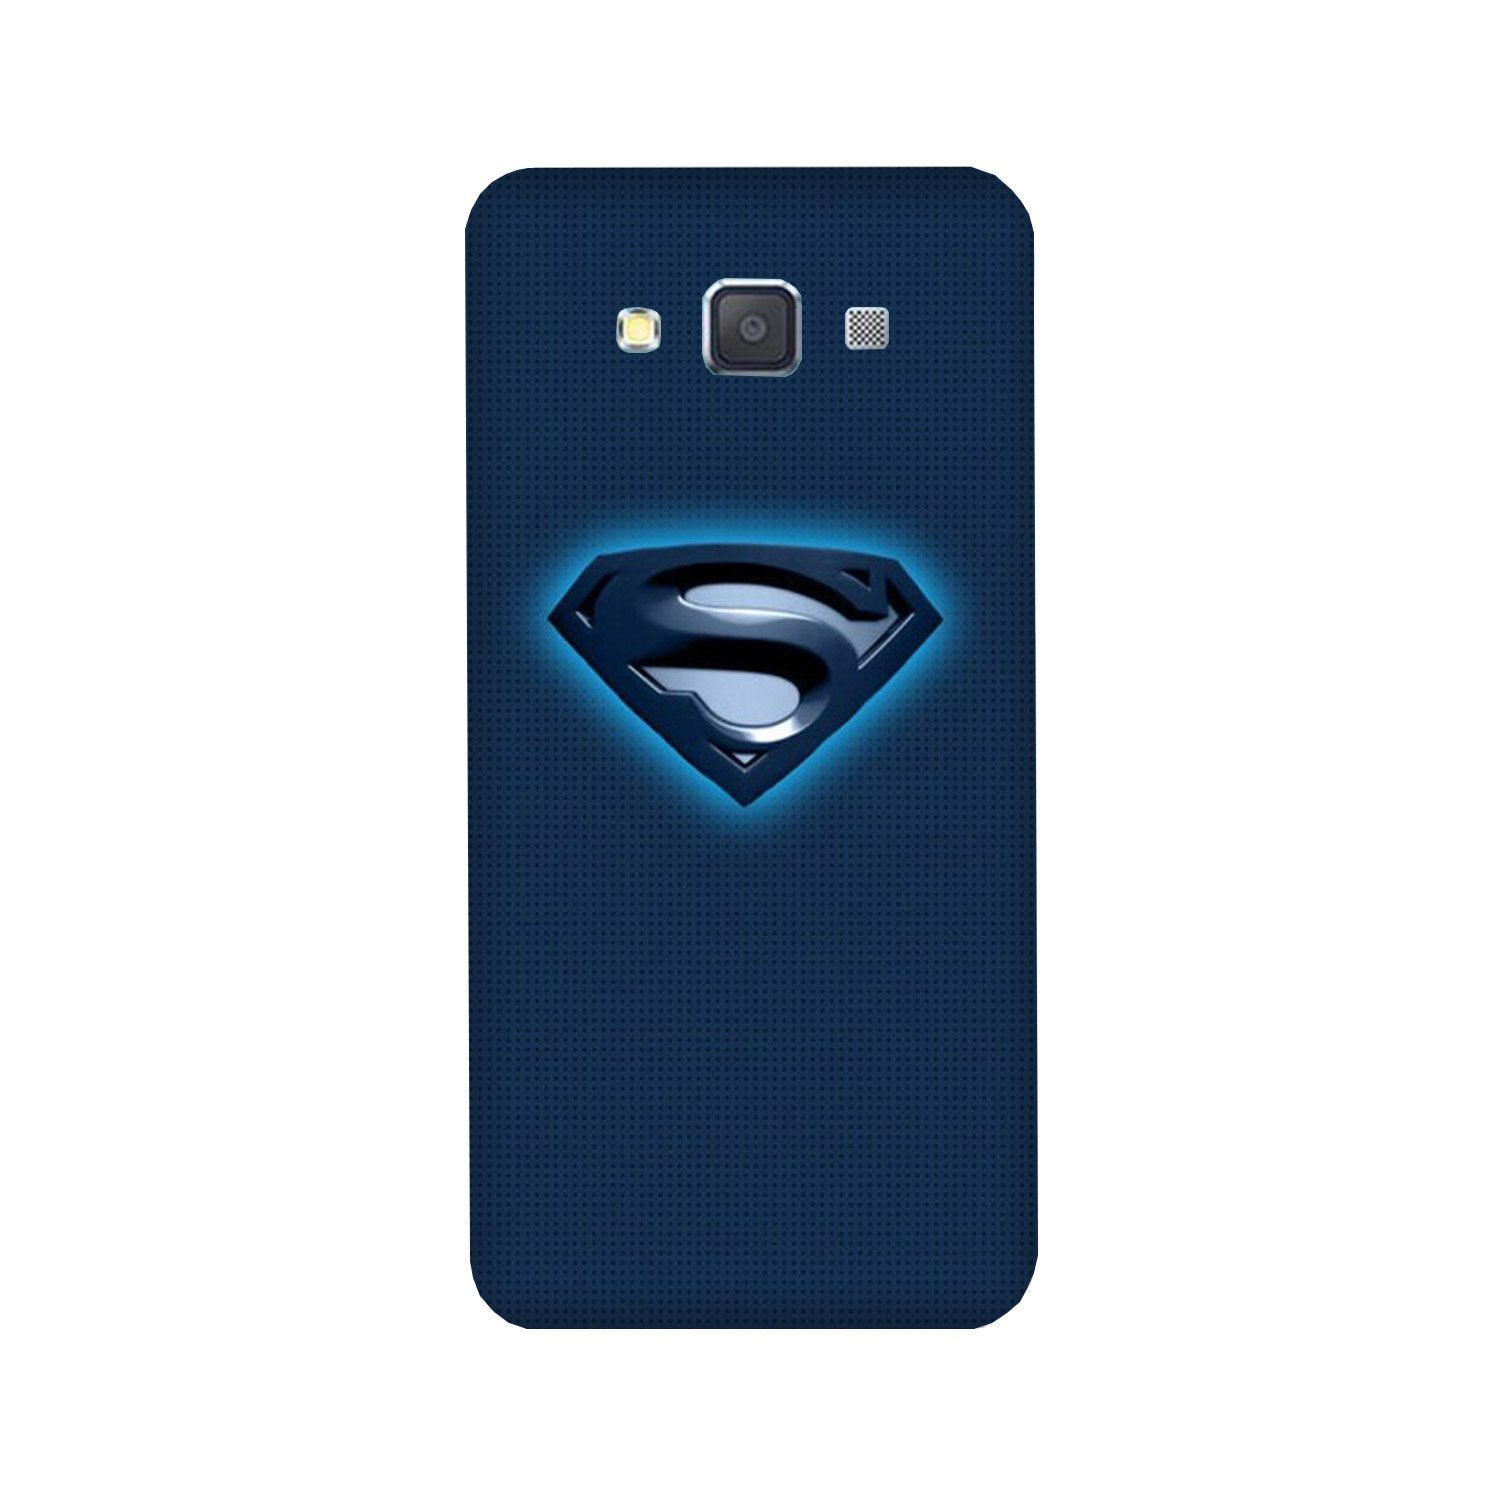 Superman Superhero Case for Galaxy J5 (2016)  (Design - 117)